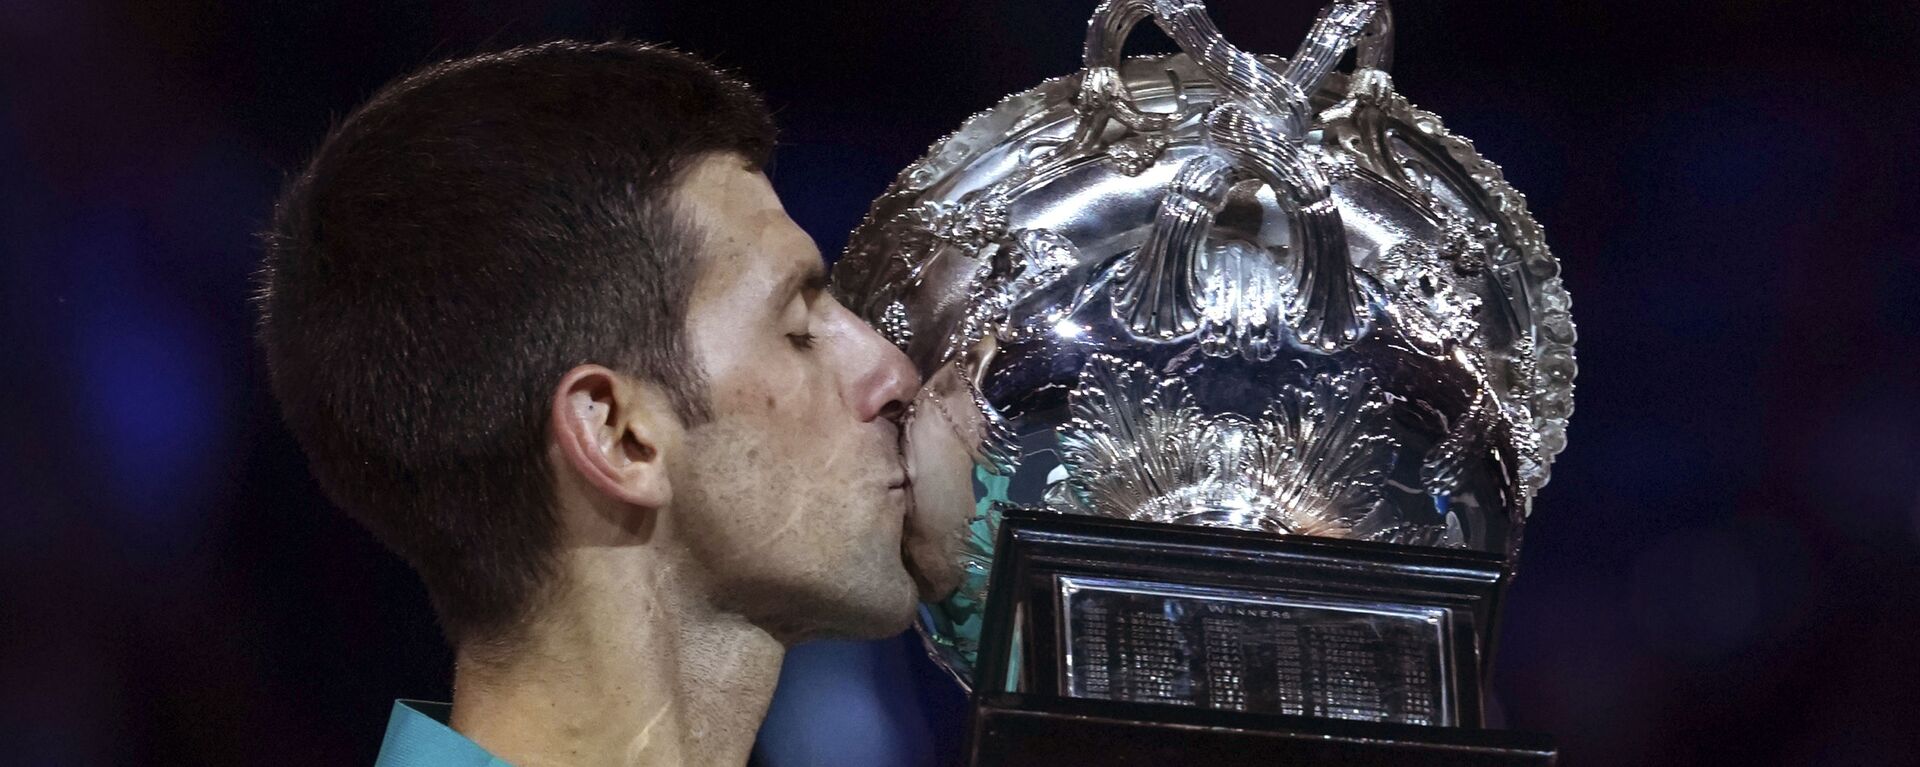 Novak Đoković sa trofejom Australijan opena 2021. - Sputnik Srbija, 1920, 24.02.2021